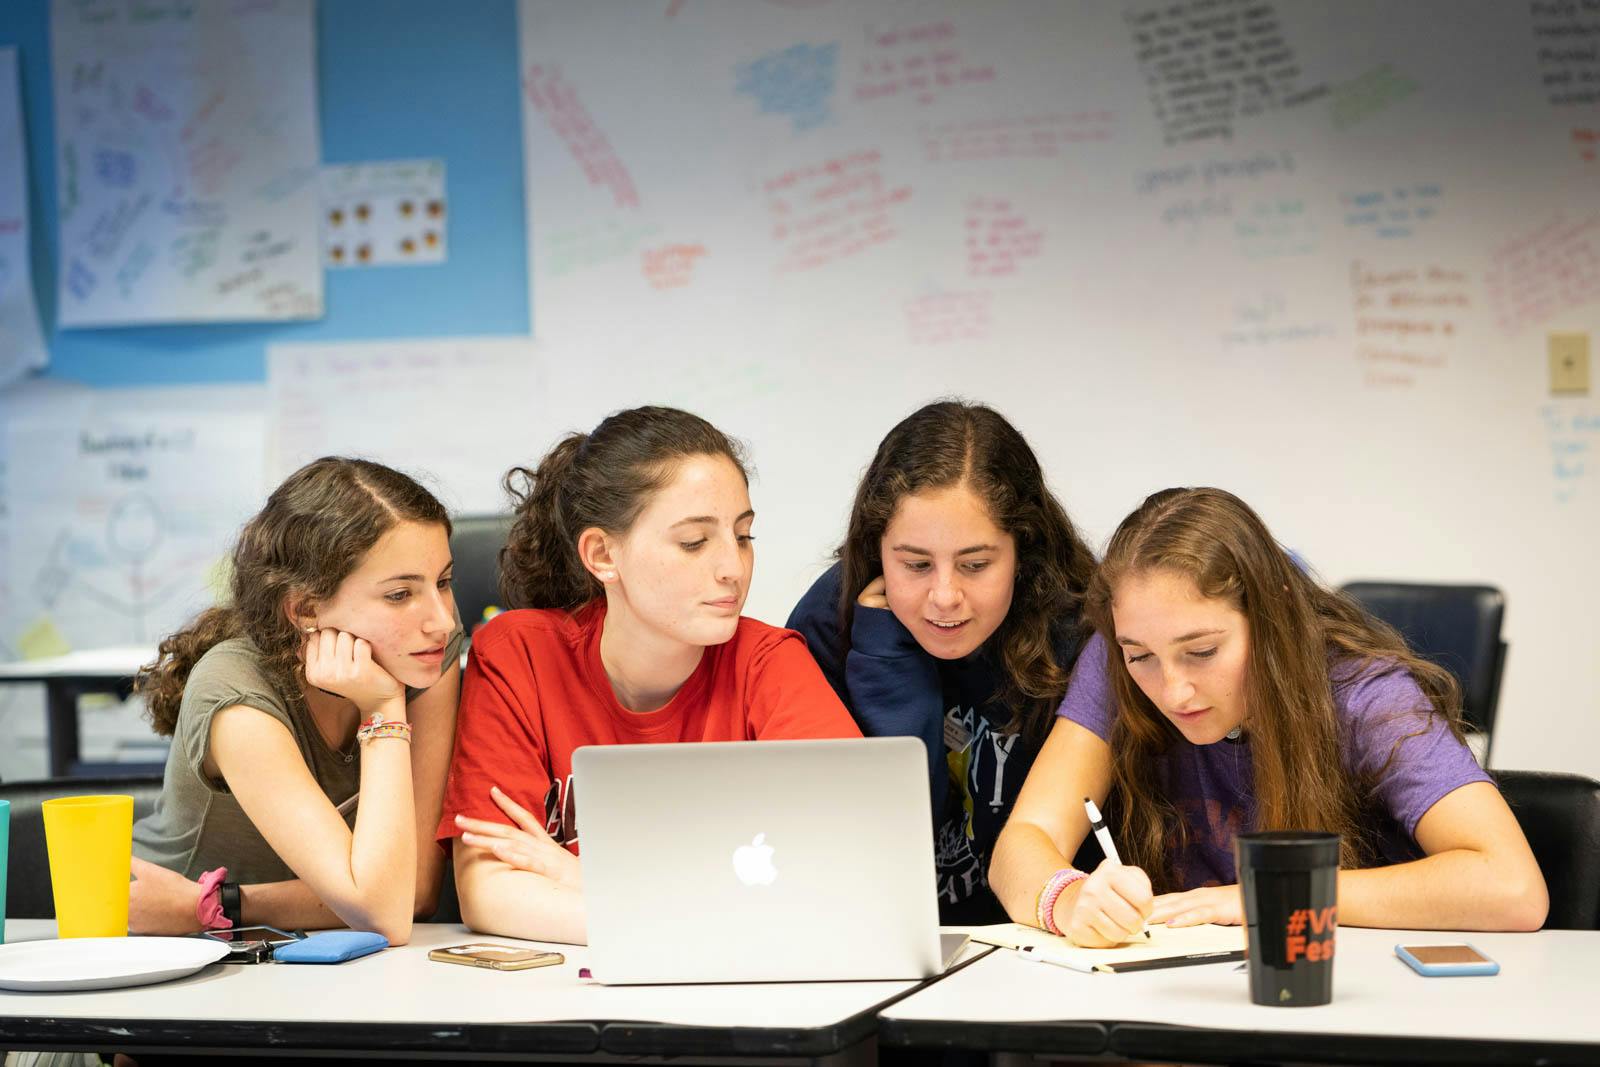 Four teenage girls huddled around a laptop working together.